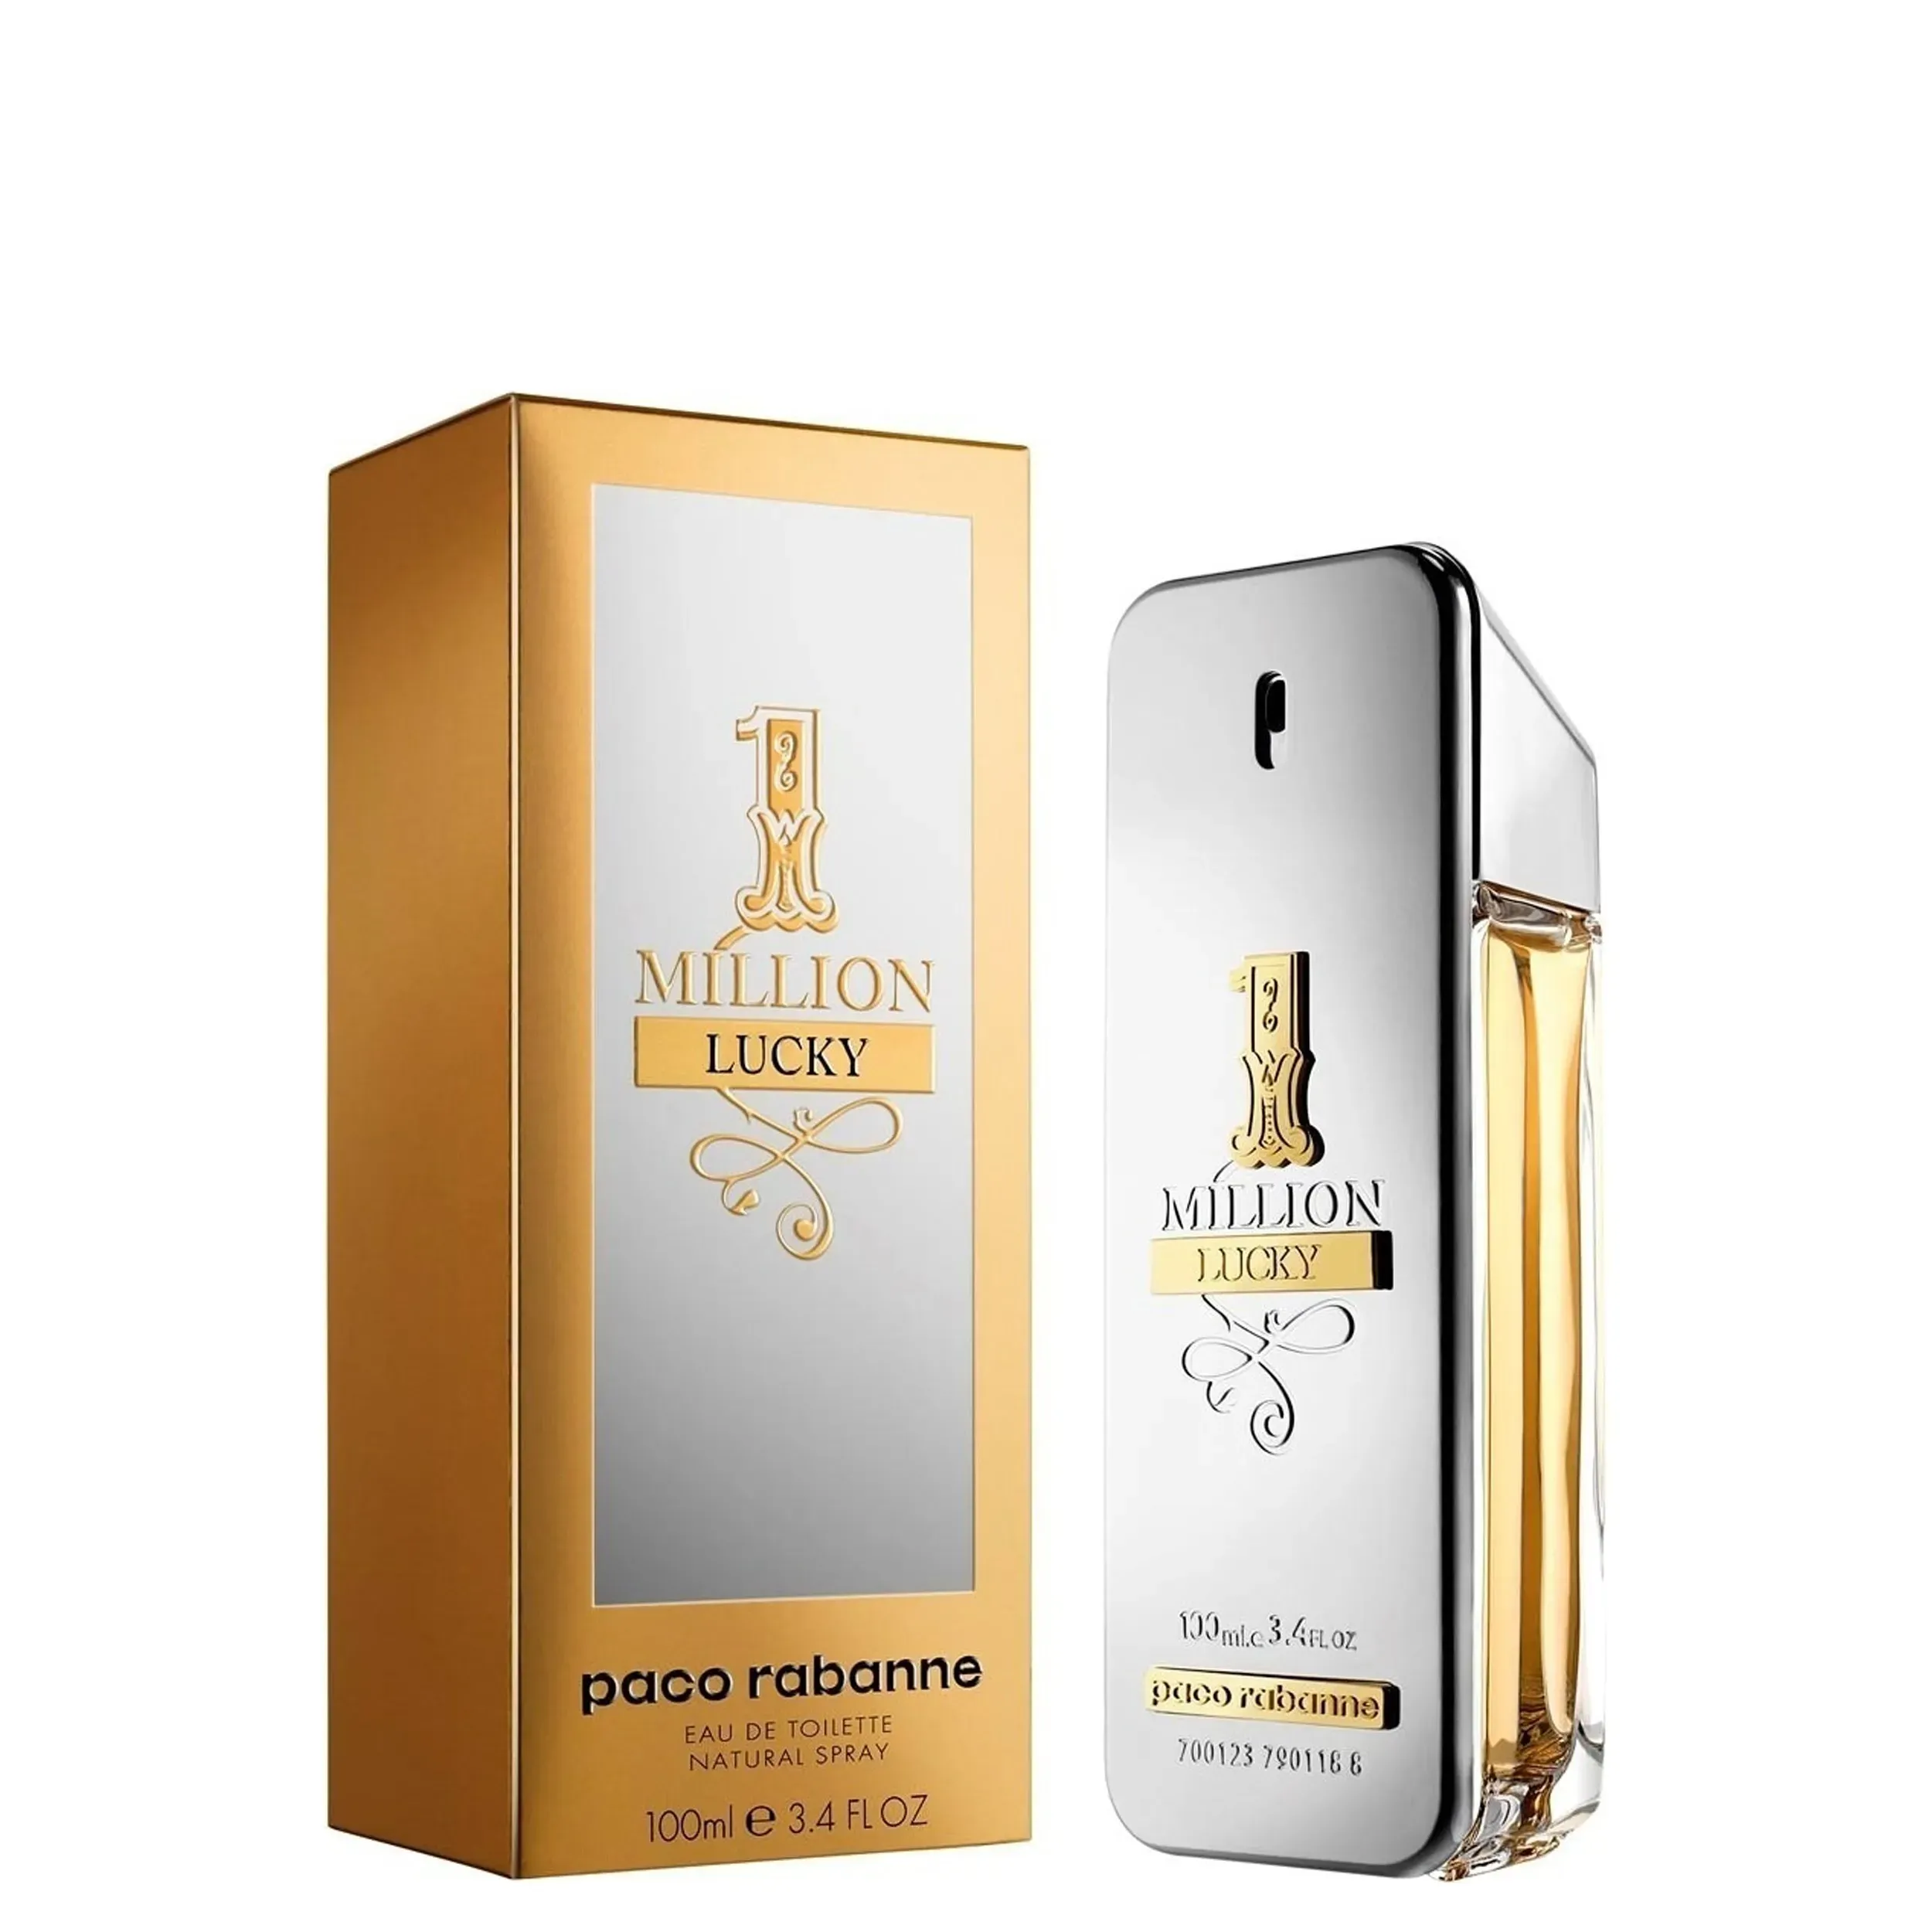 Perfume 1 Million Lucky Paco Rabanne  (Replica Importada)- Hombre